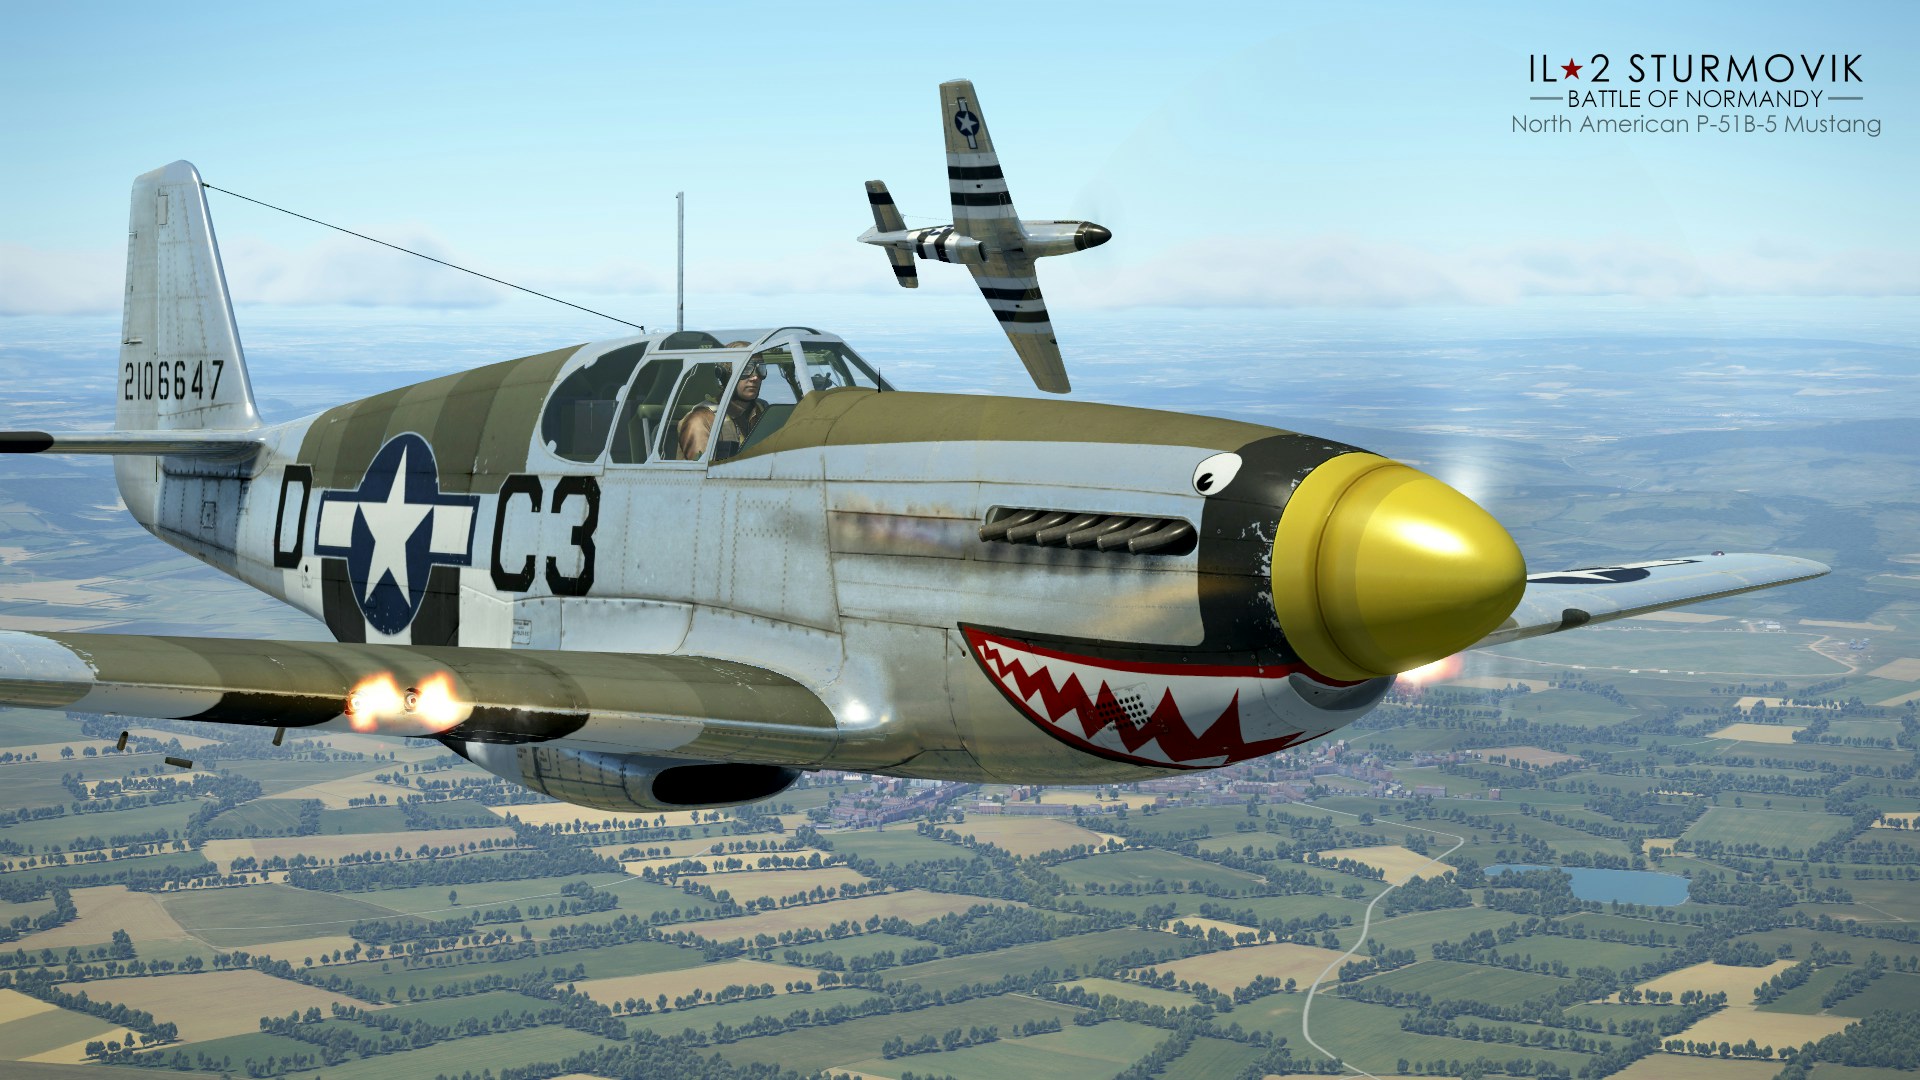 IL-2 Sturmovik: Battle of Normandy Released